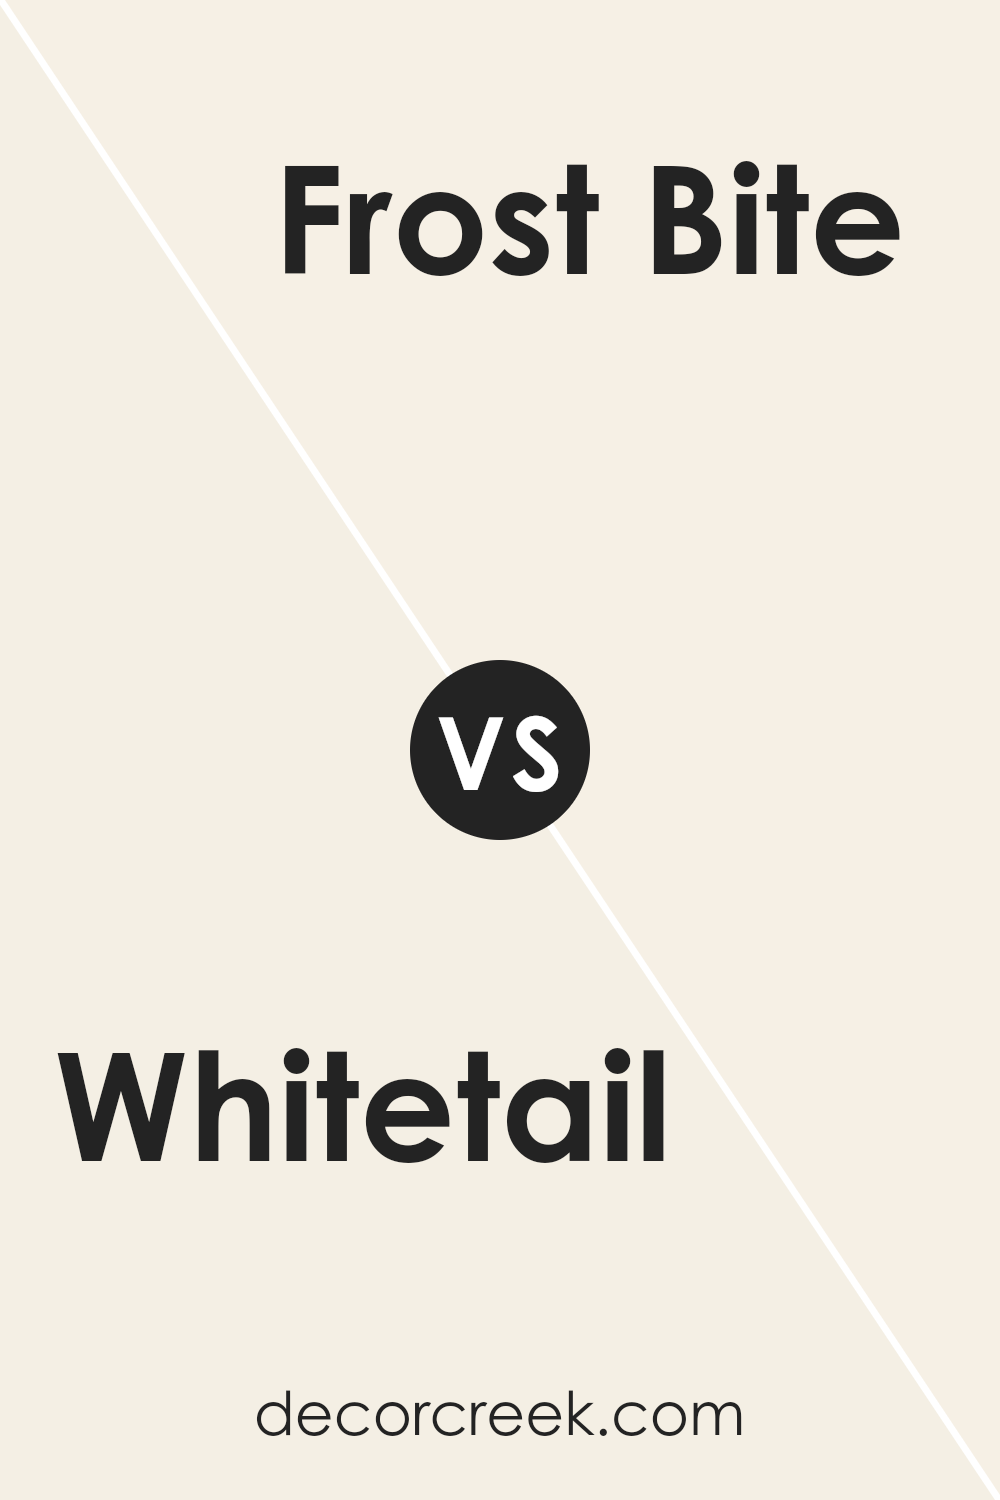 whitetail_sw_7103_vs_frost_bite_sw_9505